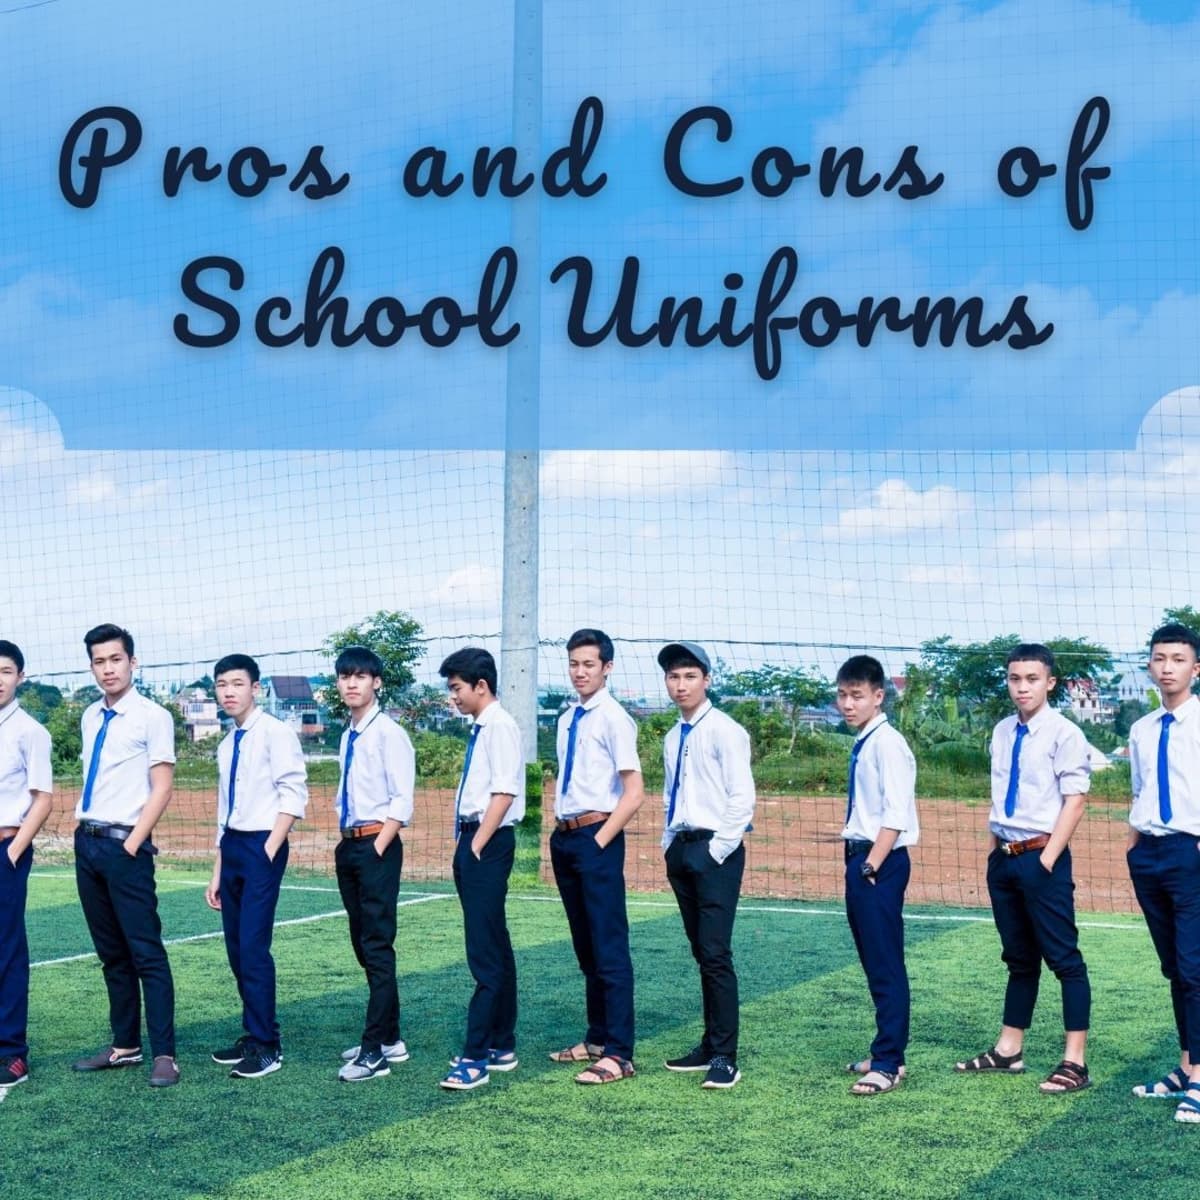 why school uniforms are good essay